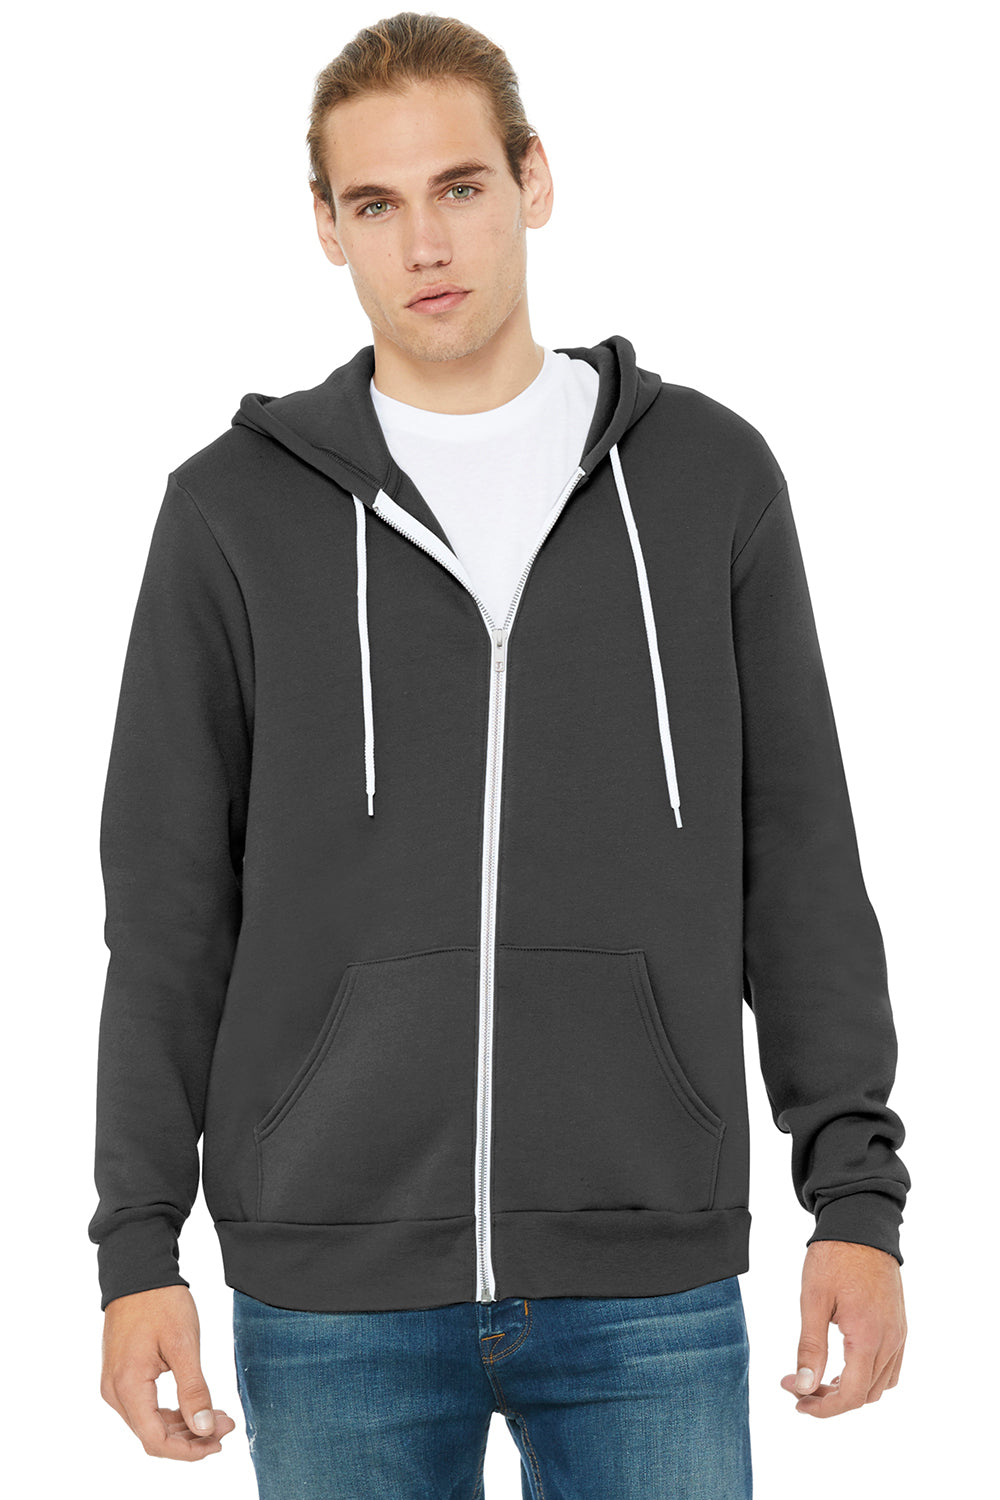 Bella + Canvas BC3739/3739 Mens Fleece Full Zip Hooded Sweatshirt Hoodie Asphalt Grey Model Front